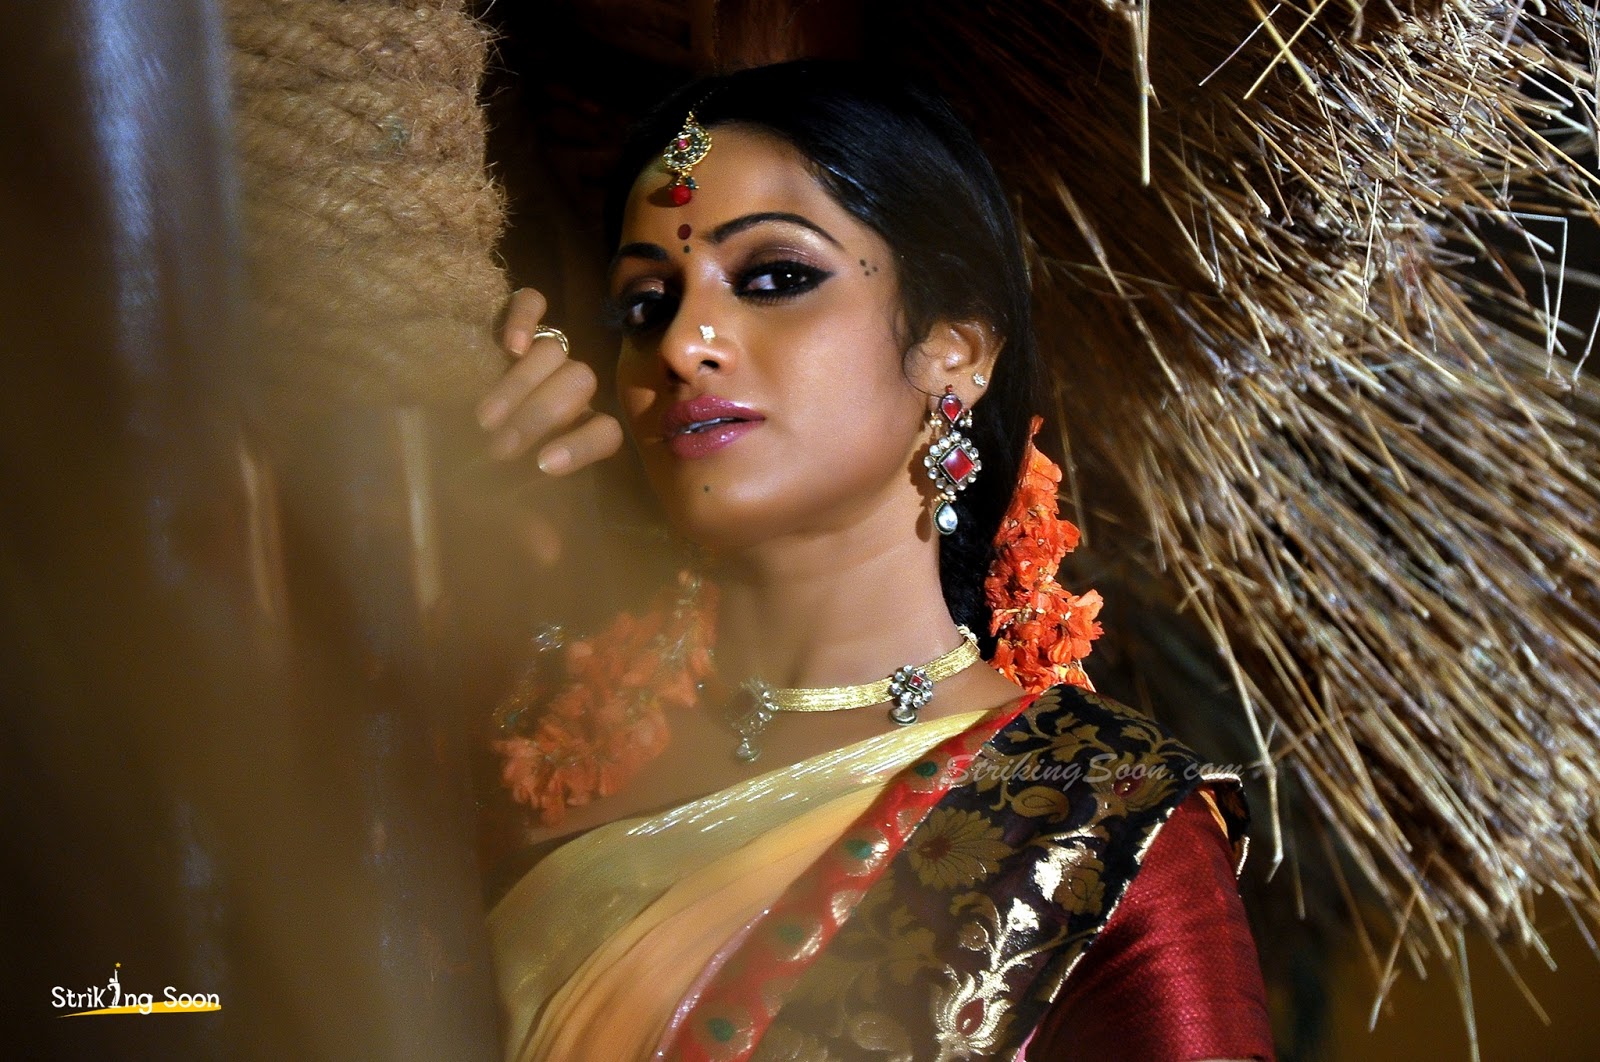 Udhayabhanu Sex Videos Download - udaya bhanu â€“ madhumati movie stills Â« strikingsoonofficial